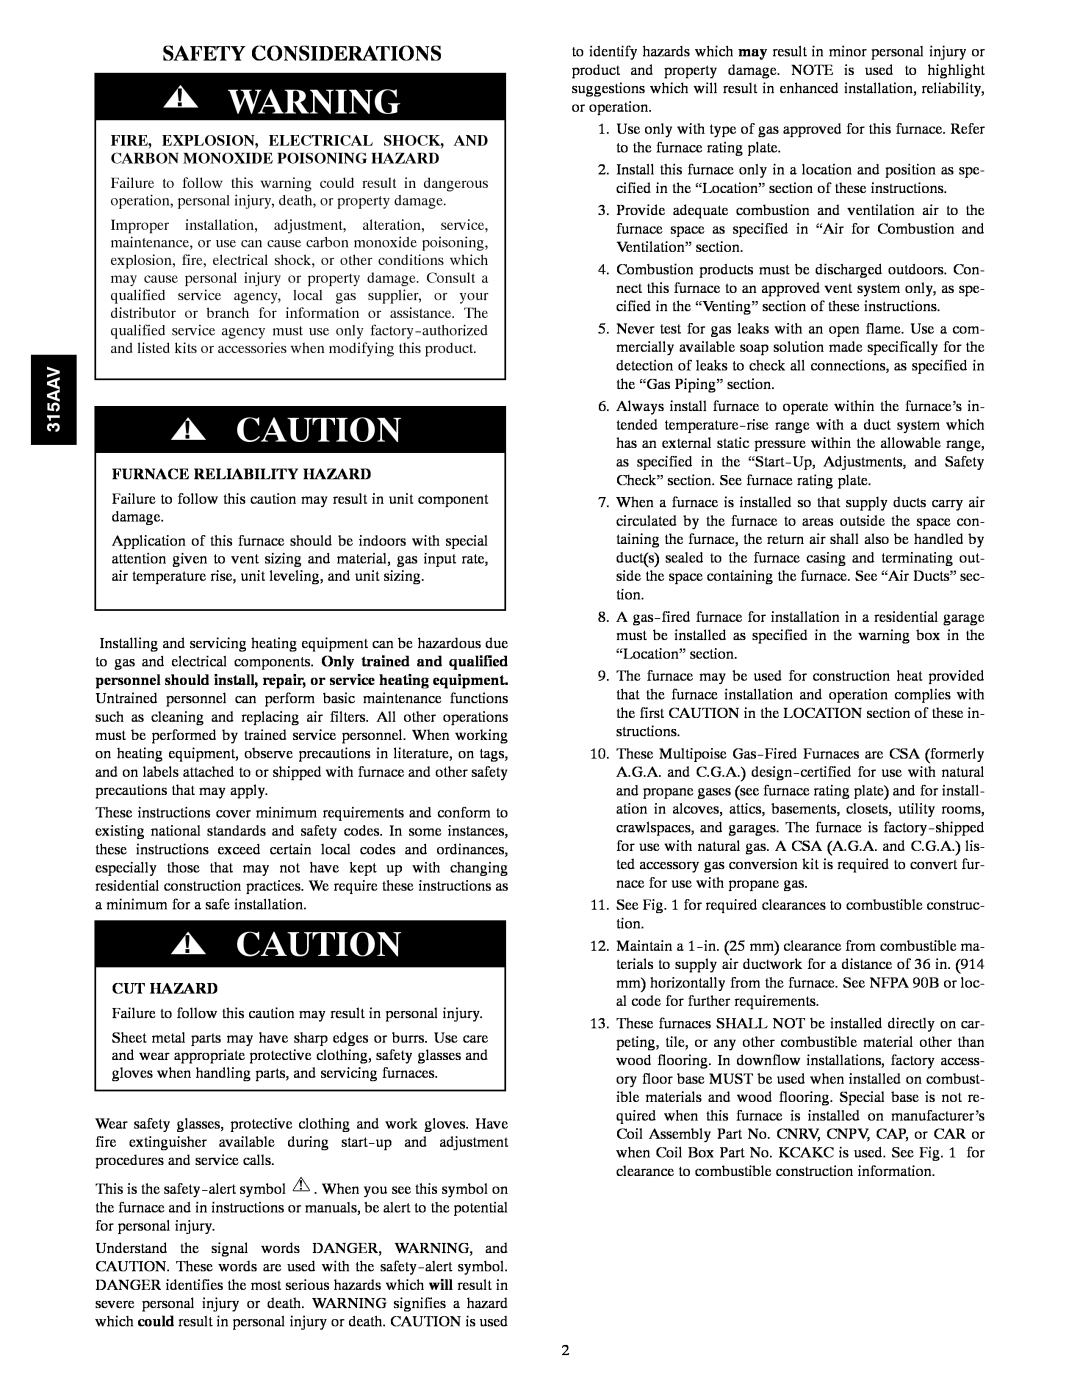 Bryant 315AAV instruction manual Safety Considerations, Furnace Reliability Hazard, Cut Hazard 